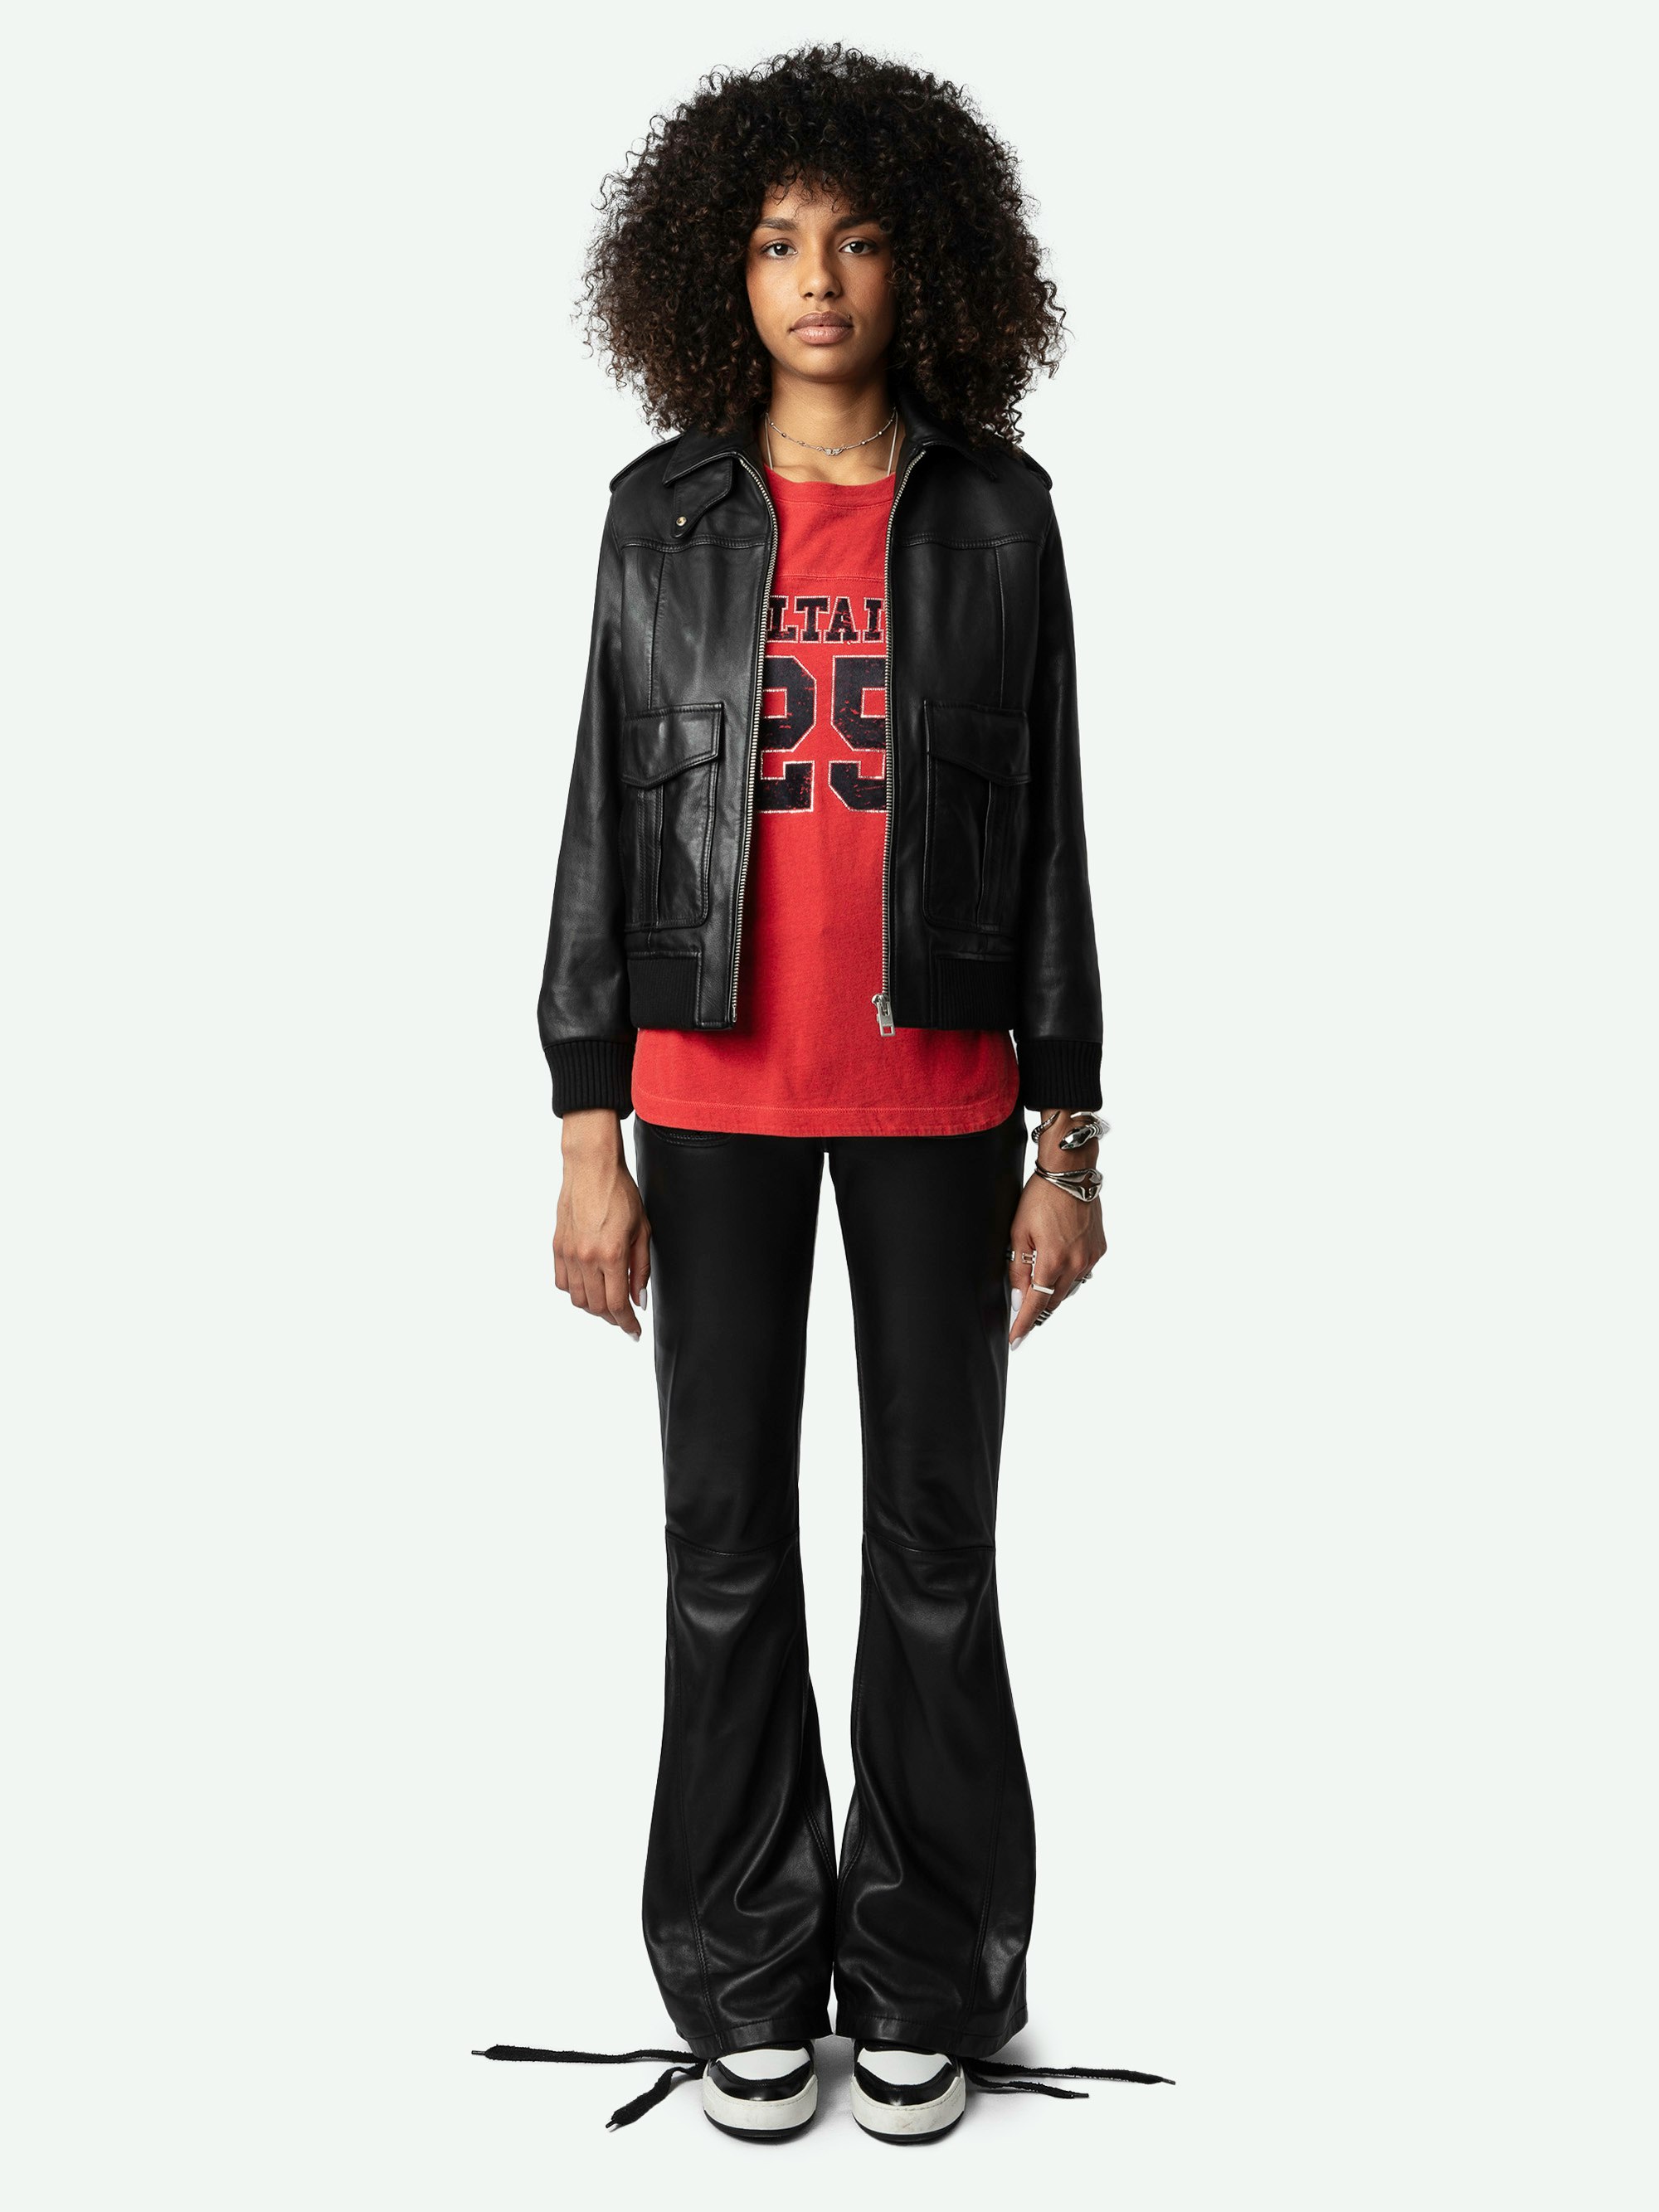 Luka Leather Jacket - Women's black leather jacket with zipper closure.